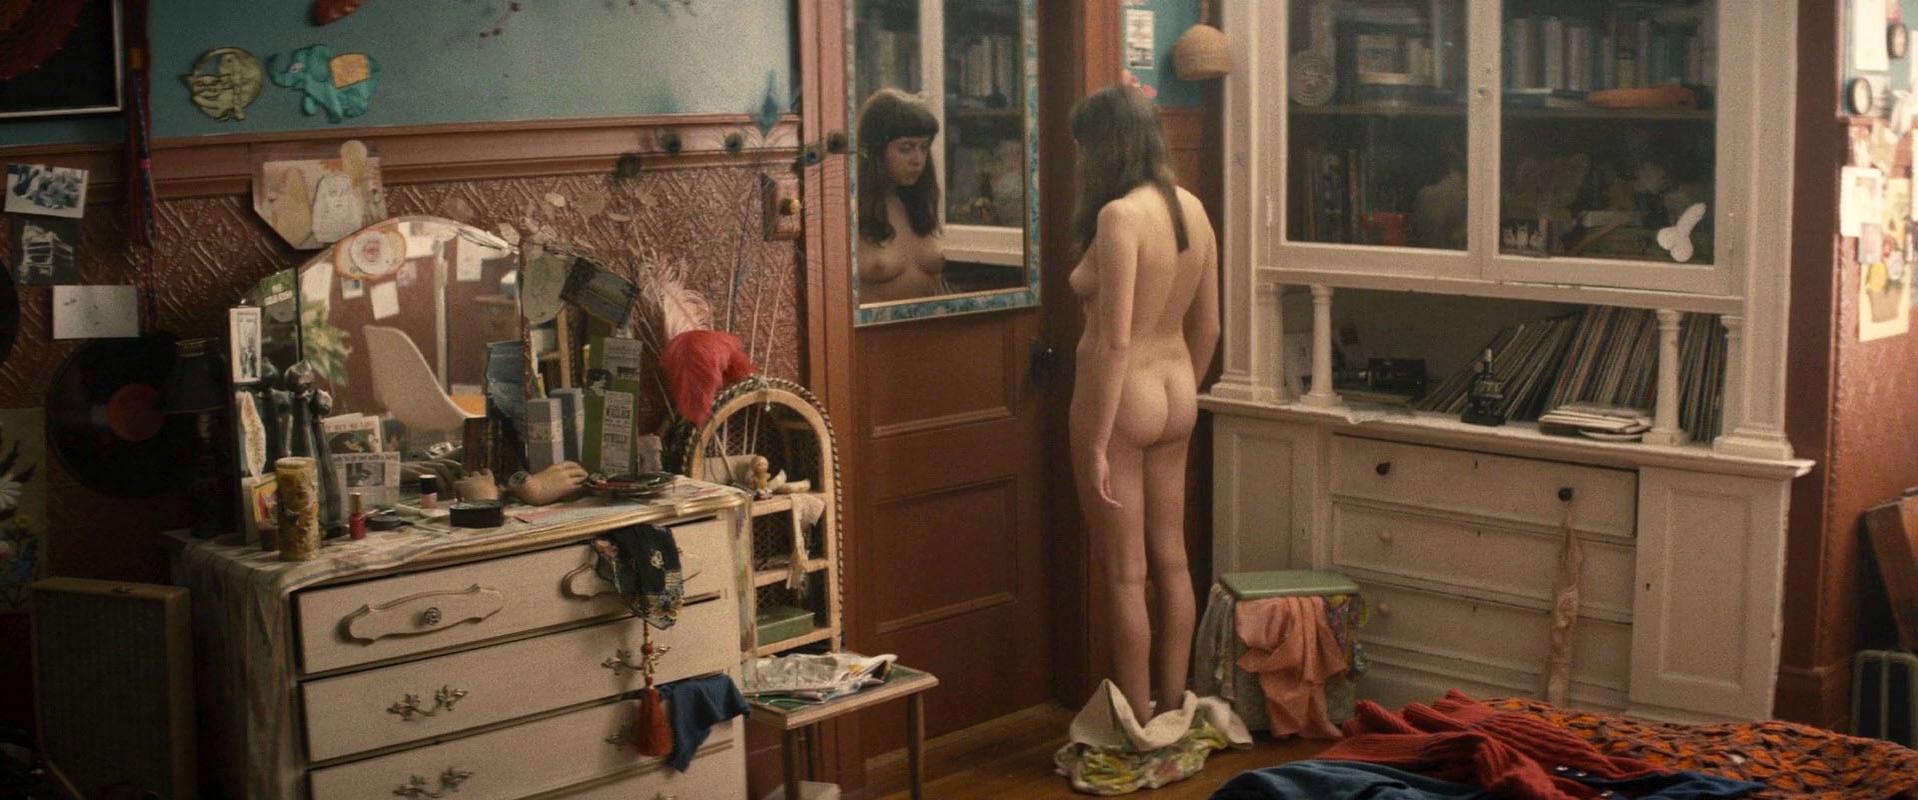 Bel Powley nude - The Diary of a Teenage Girl (2015)